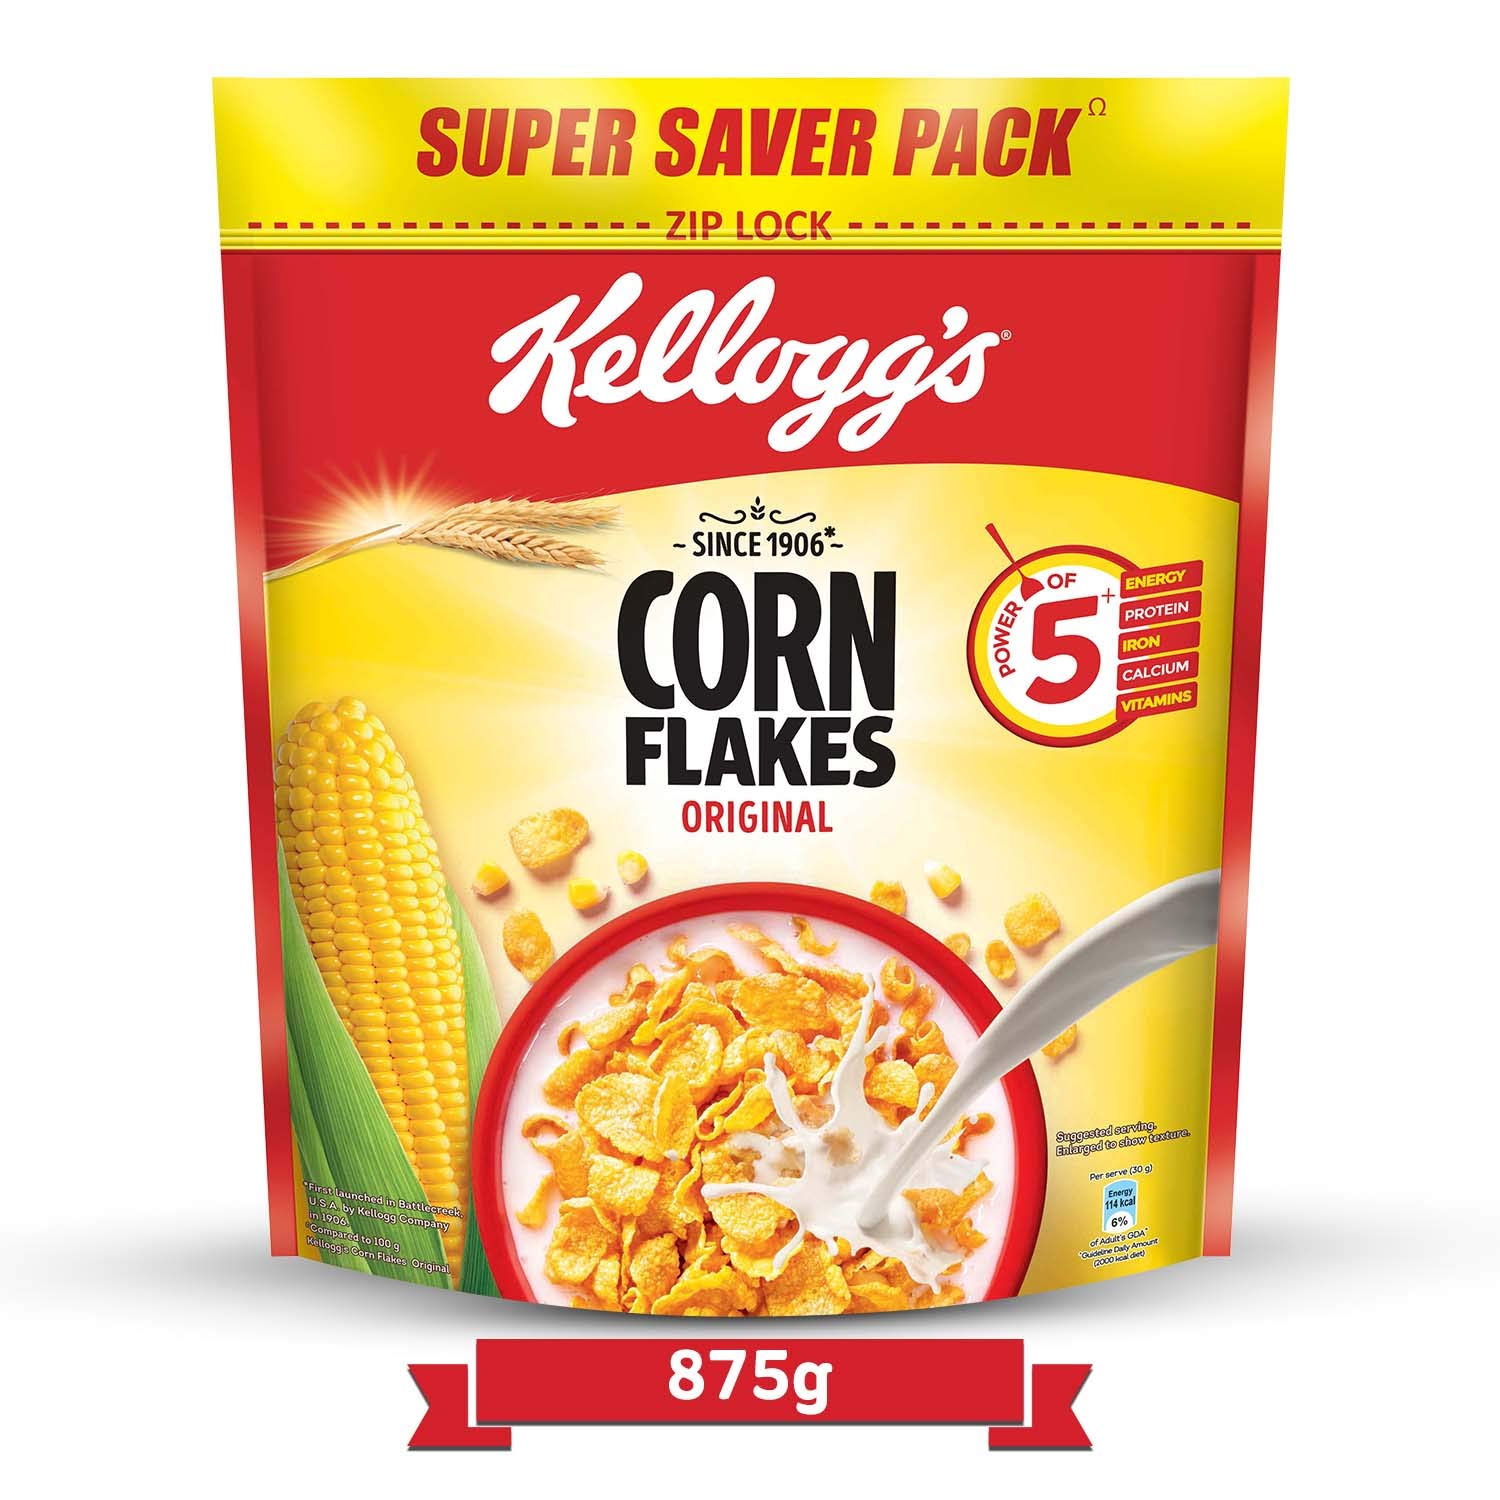 Kellogg's Corn Flakes original